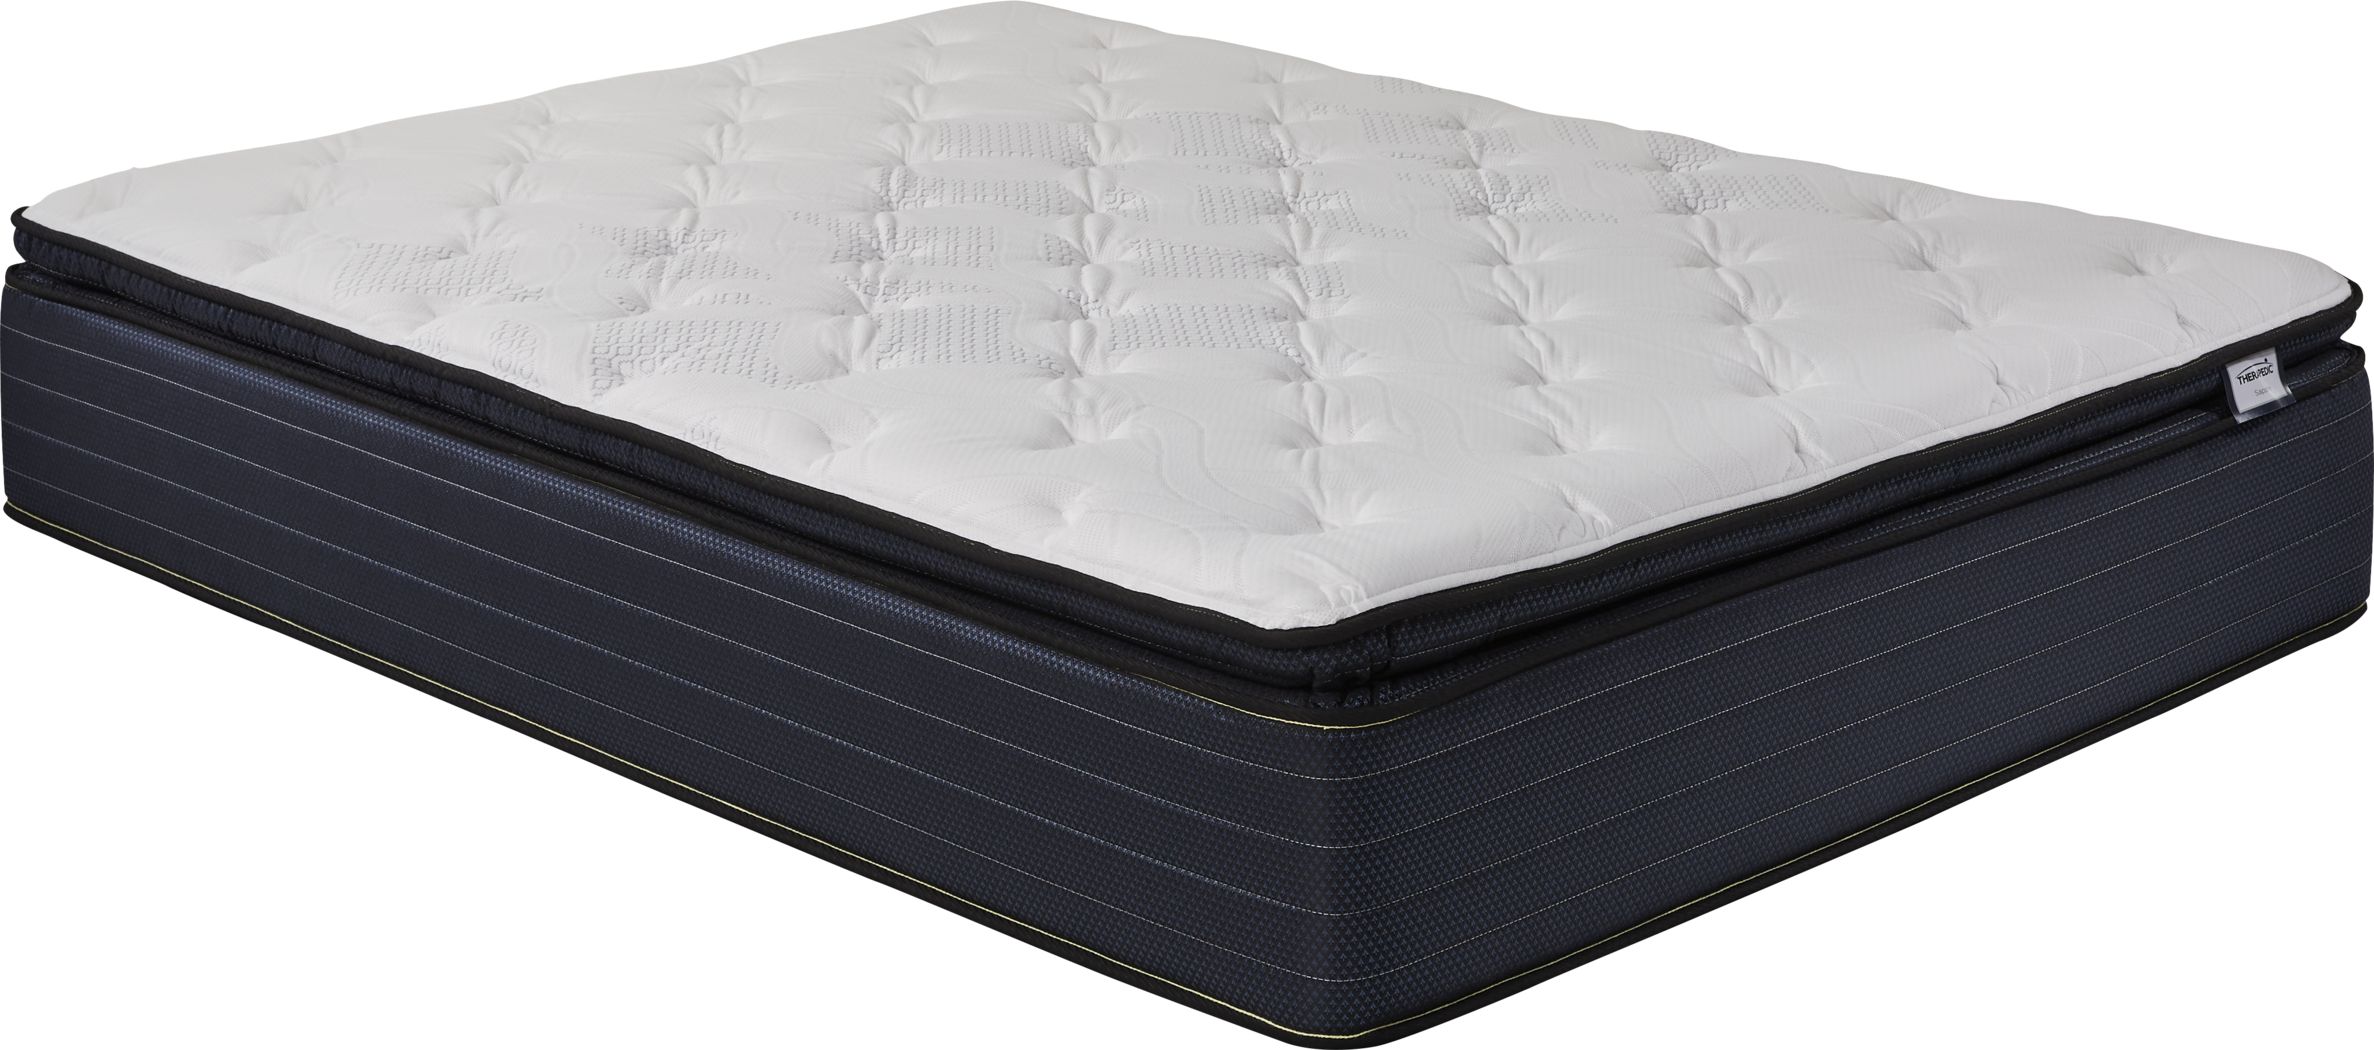 sapphire sleep royal heritage mattress